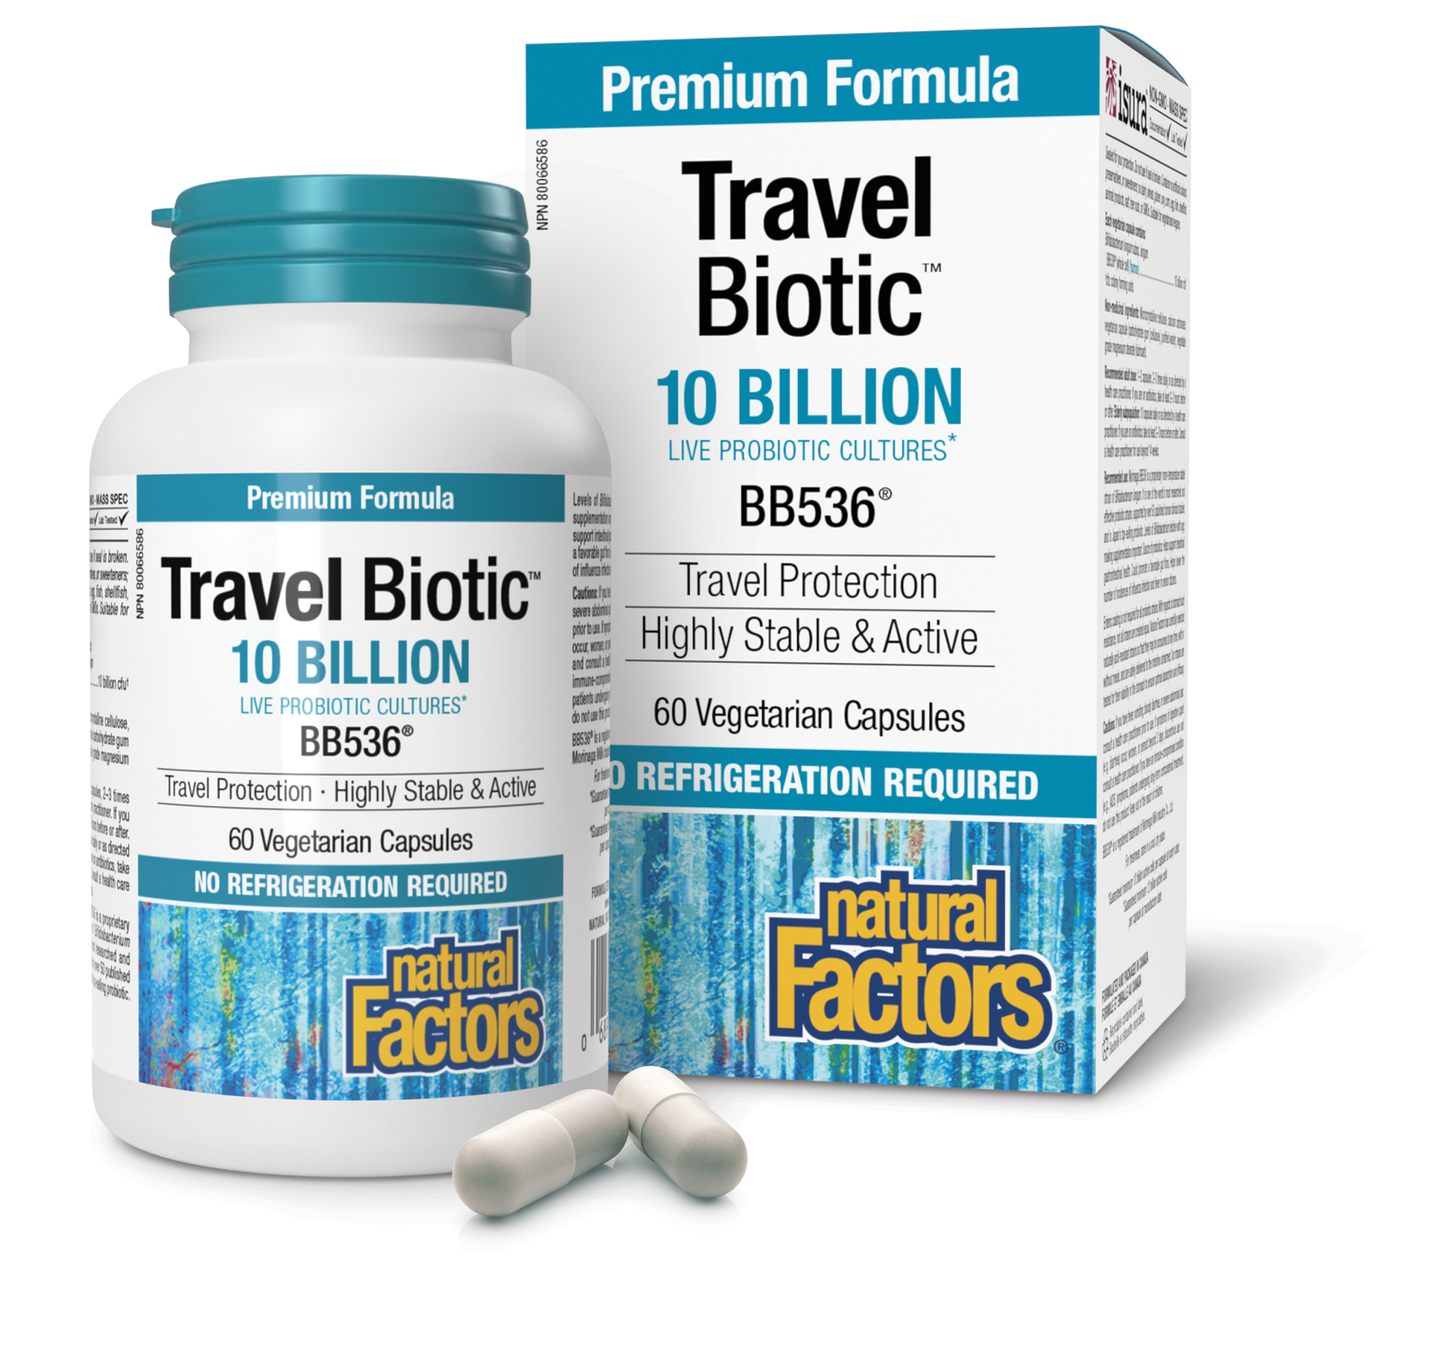 Travel Biotic BB536 10 Billion Live Probiotic Cultures, Natural Factors|v|image|1812